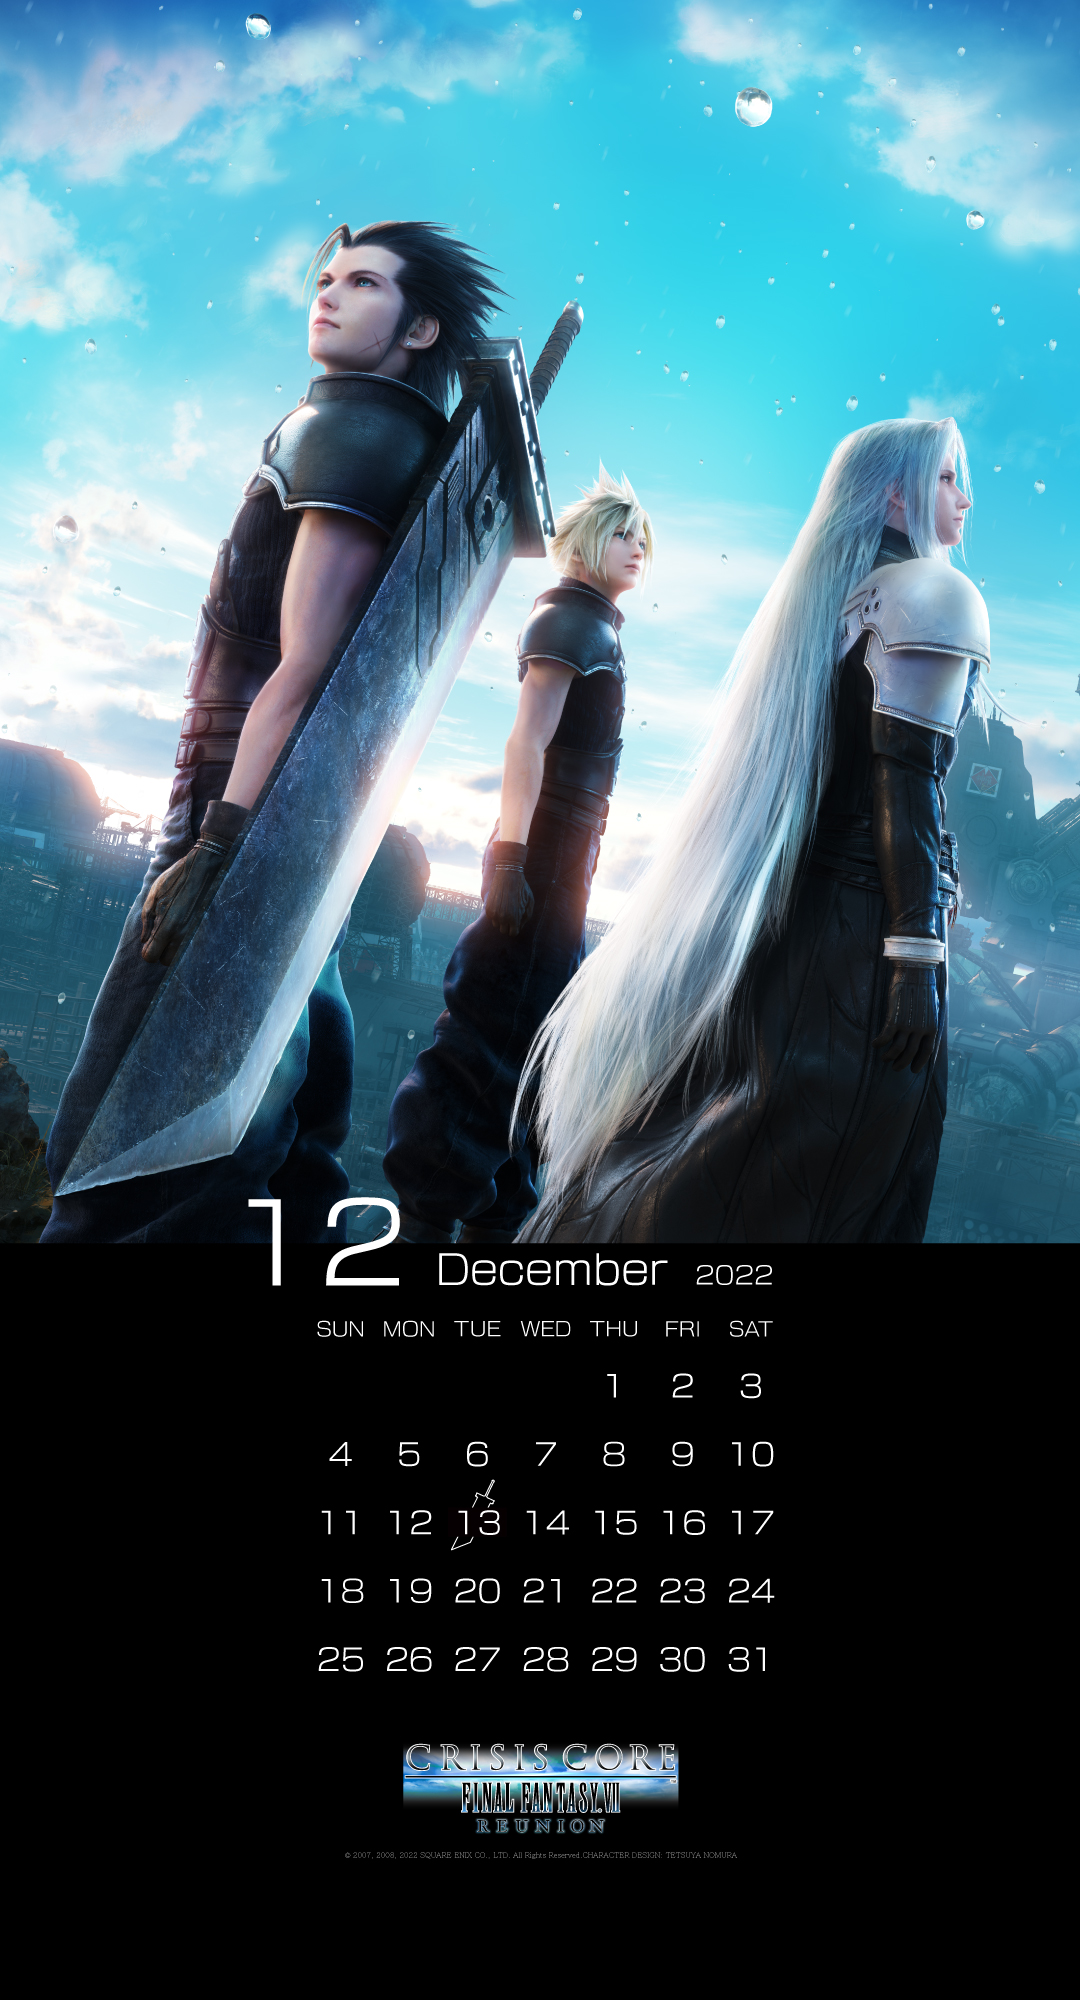 December FFVII Remake Wallpaper Shows Crisis Core Zack, Cloud, and Sephiroth